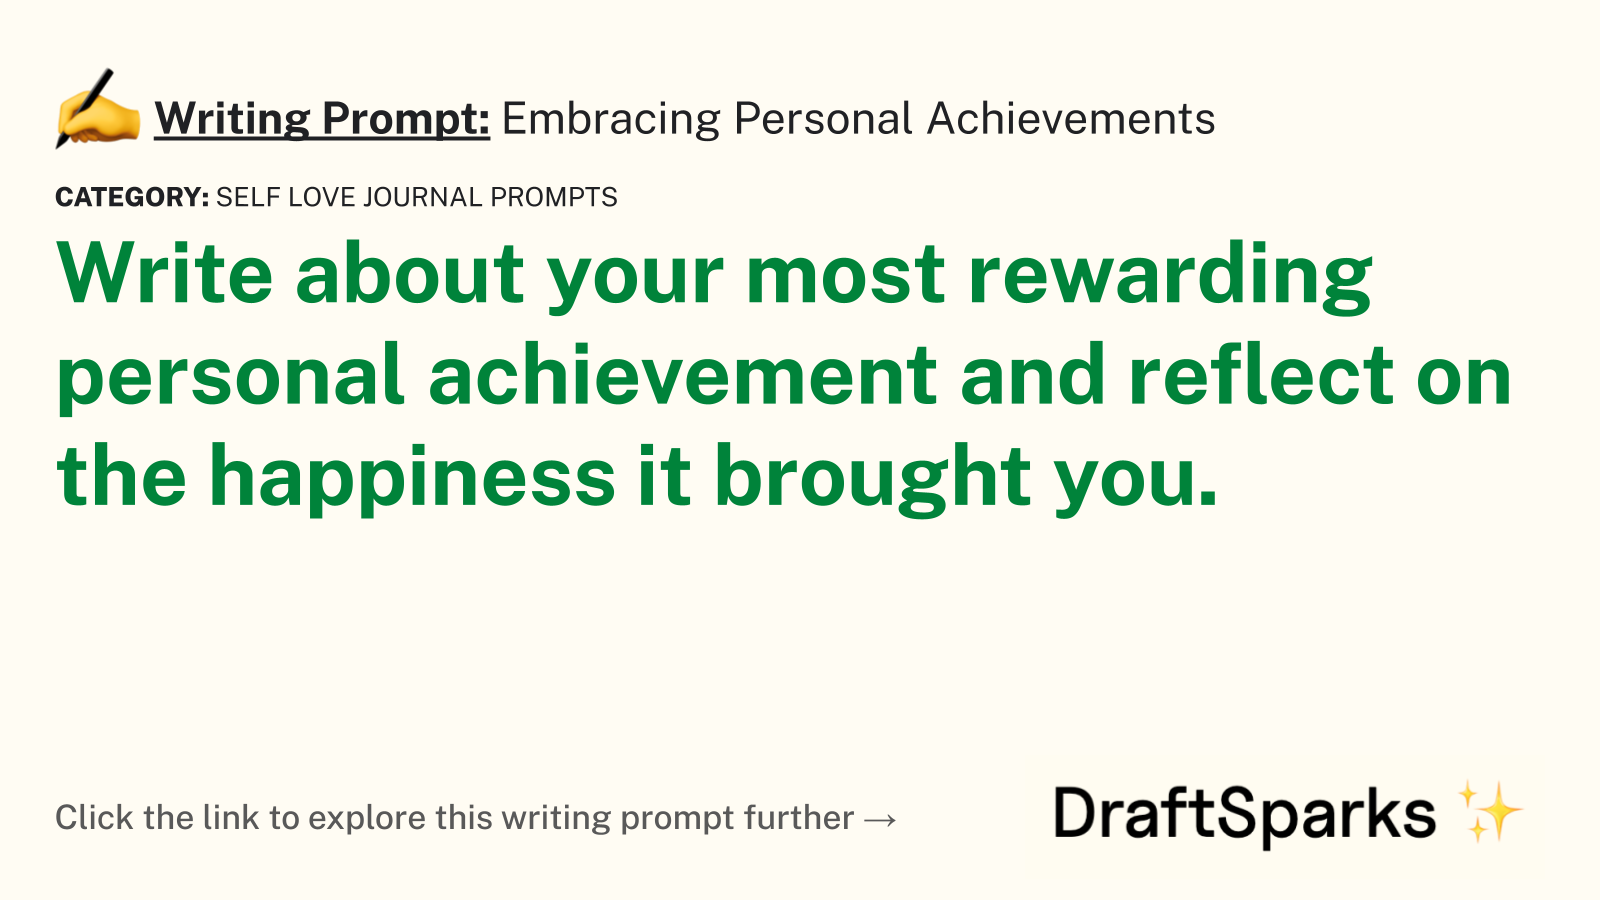 Embracing Personal Achievements